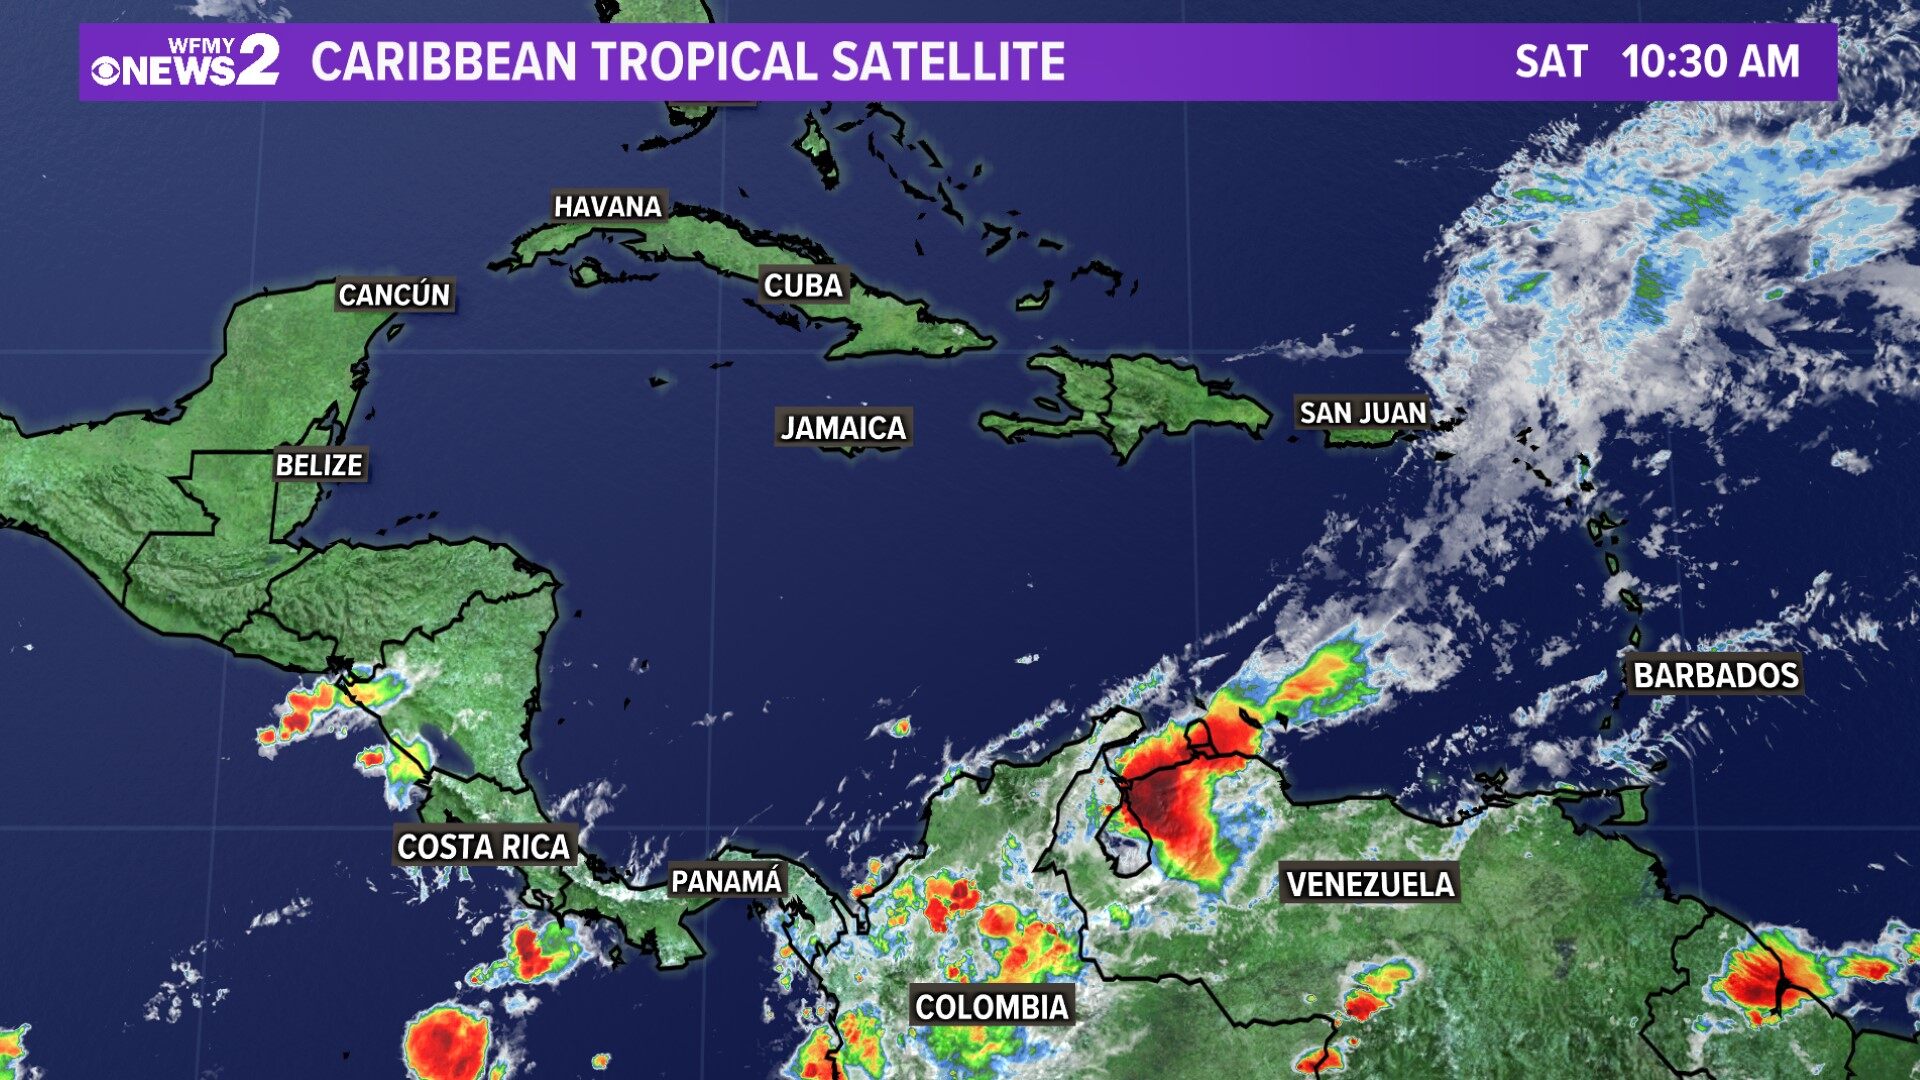 Tropical Satellite Caribbean